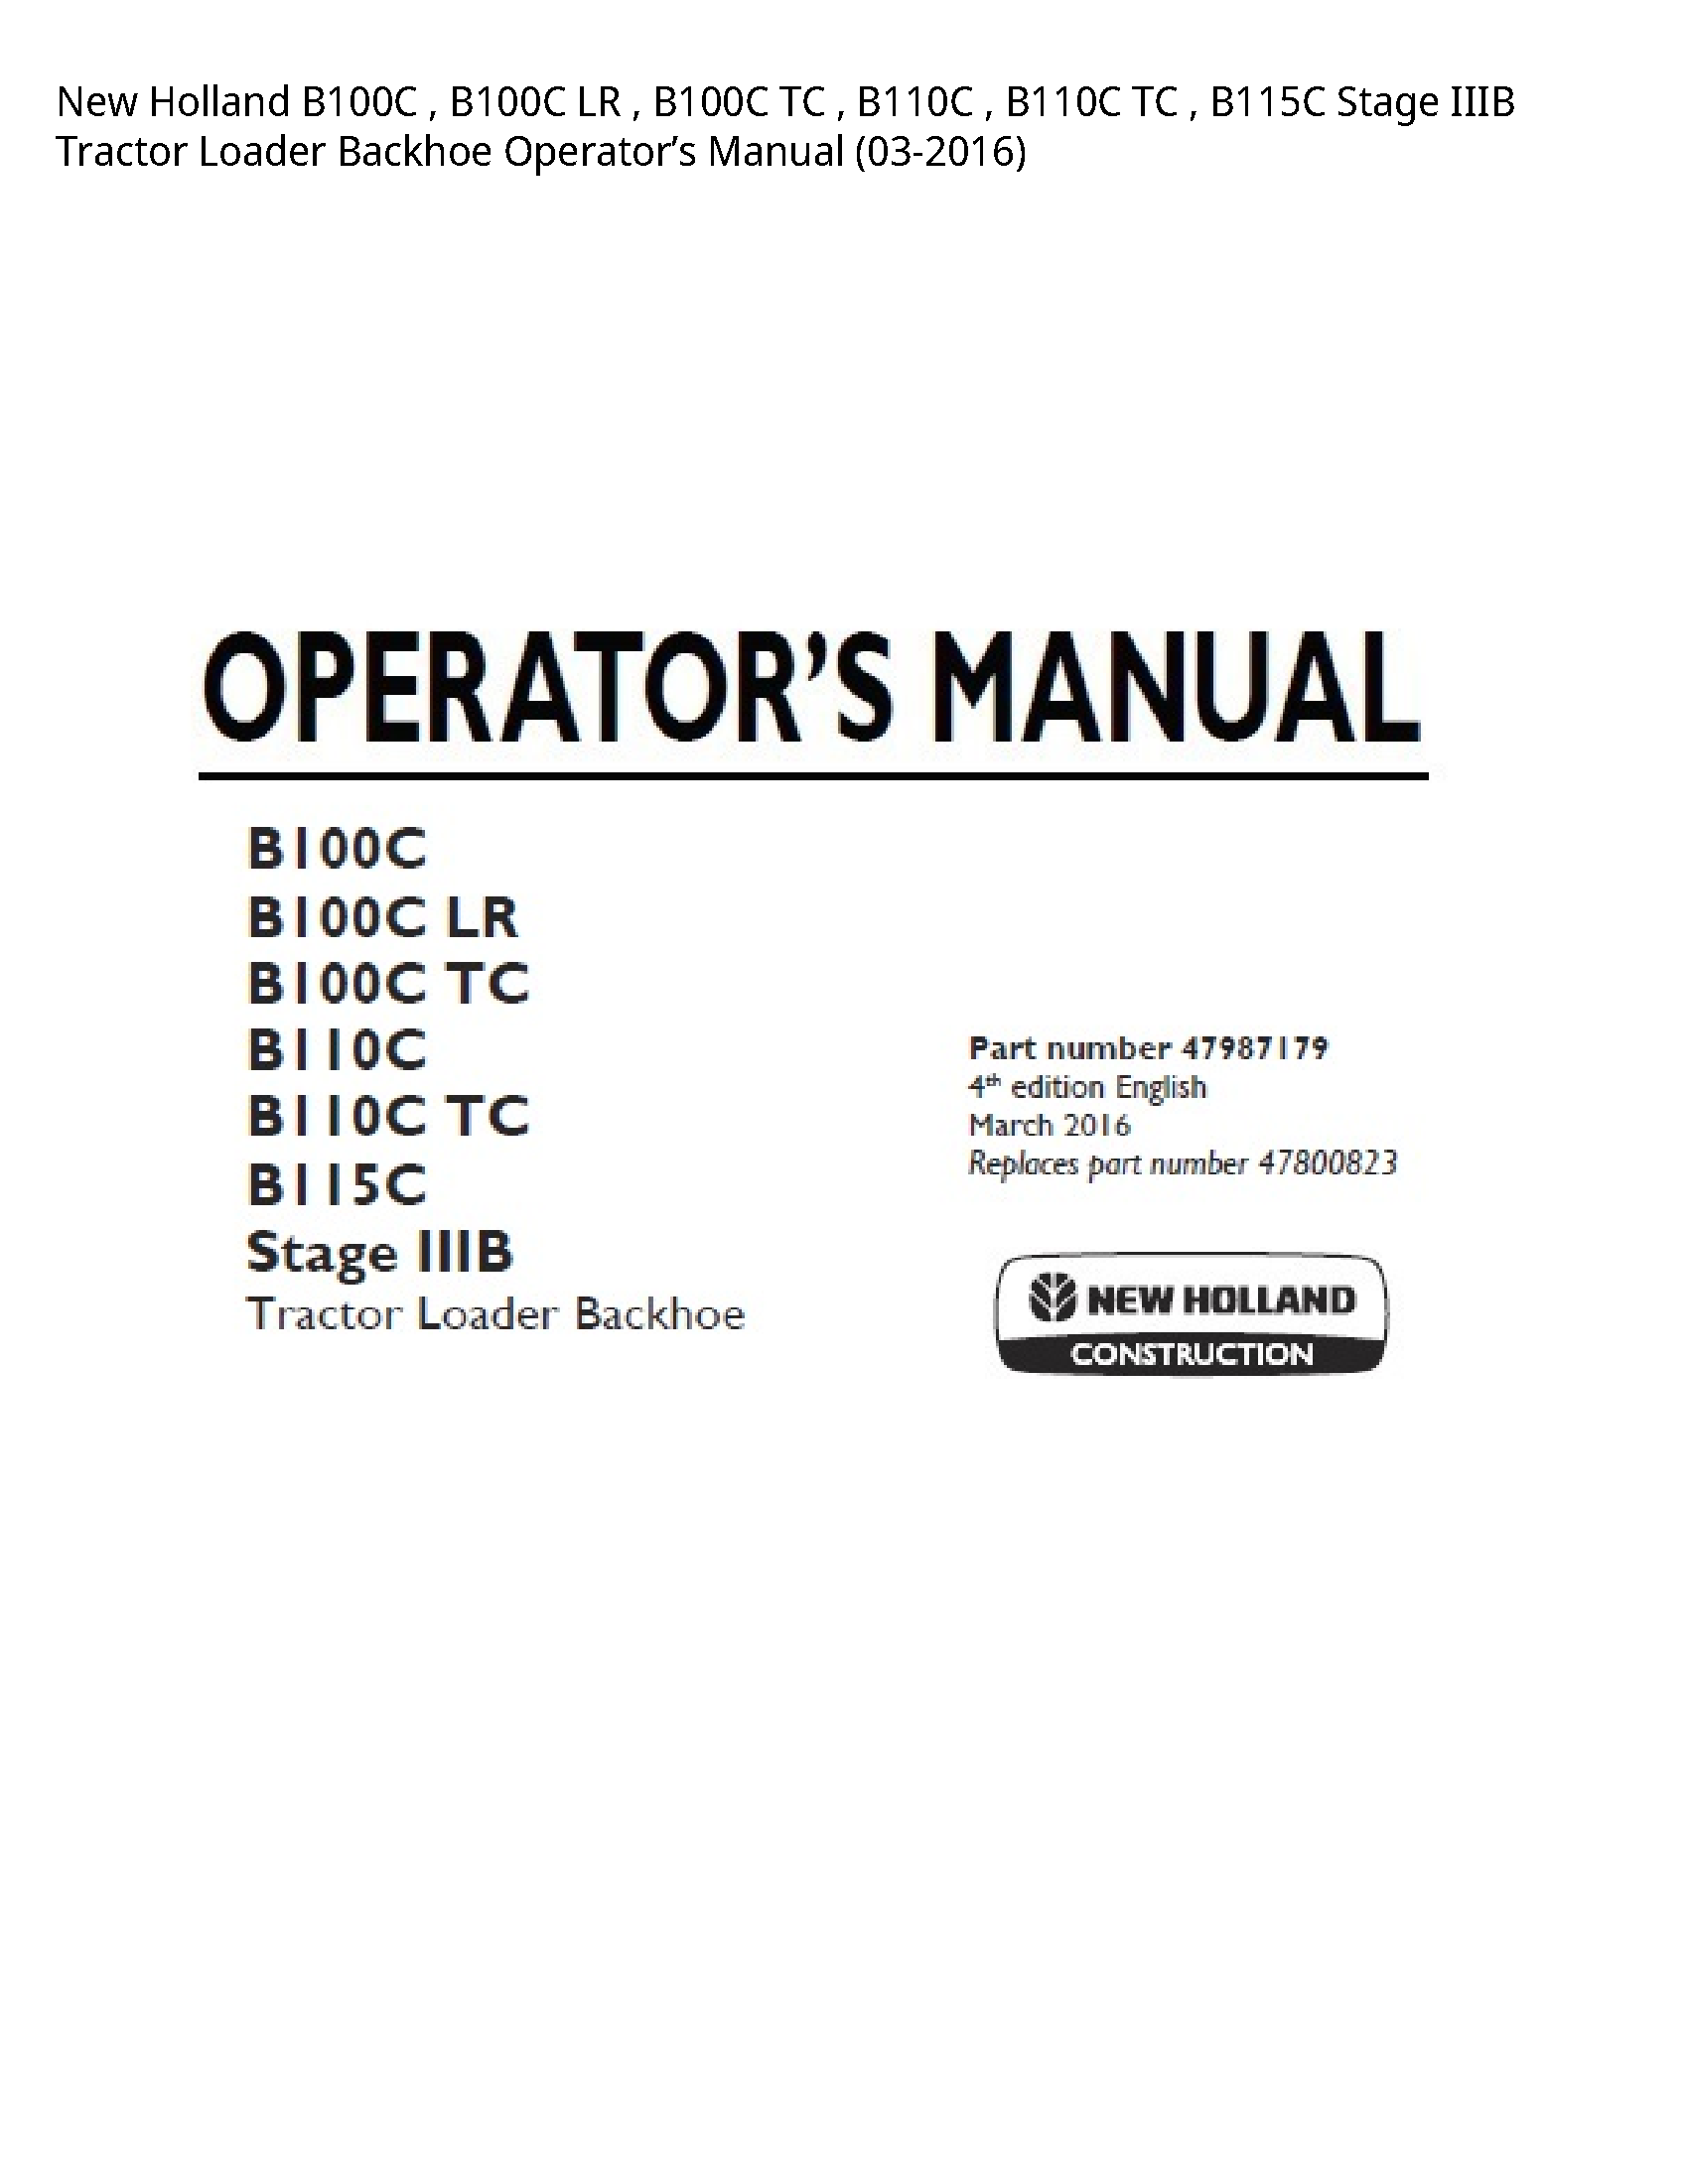 New Holland B100C LR TC TC Stage IIIB Tractor Loader Backhoe Operator’s manual